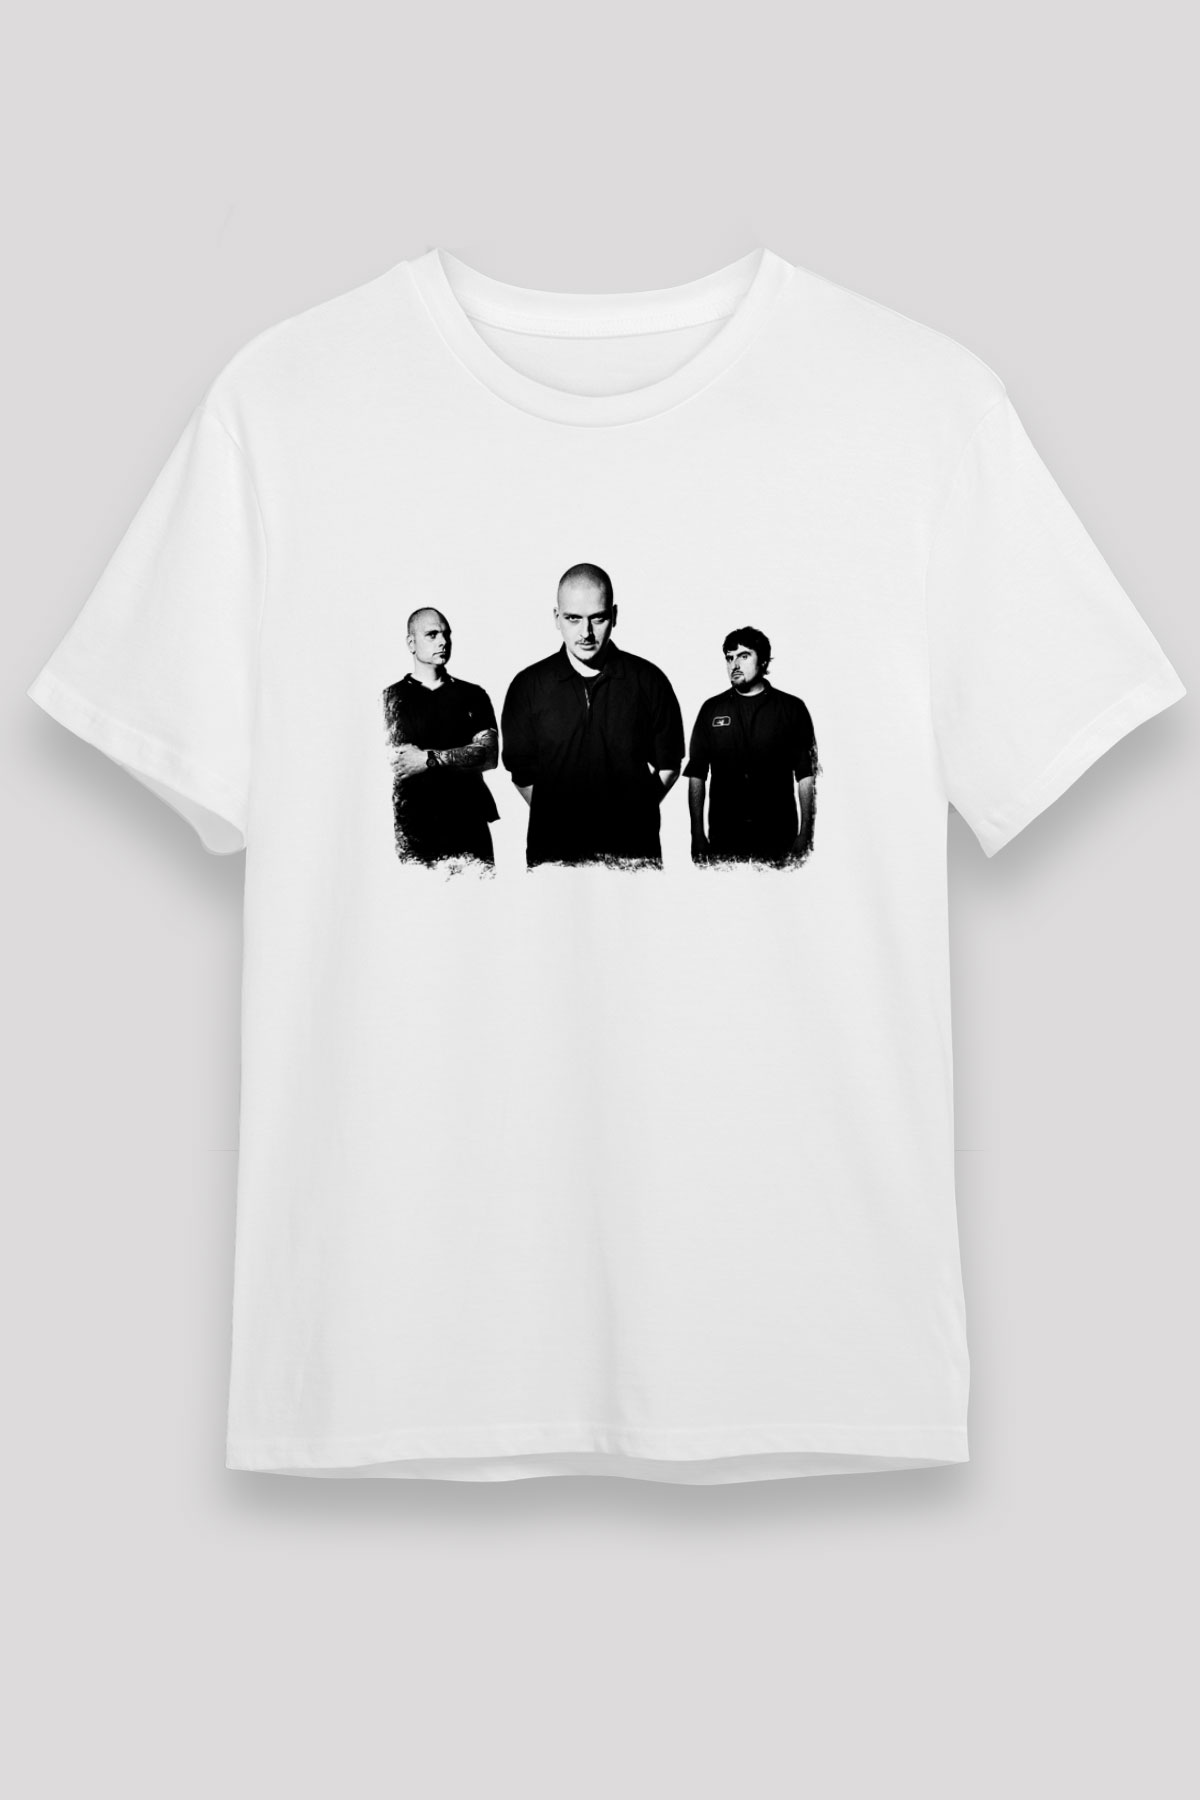 Godflesh T shirt, Music Band ,Unisex Tshirt 04/